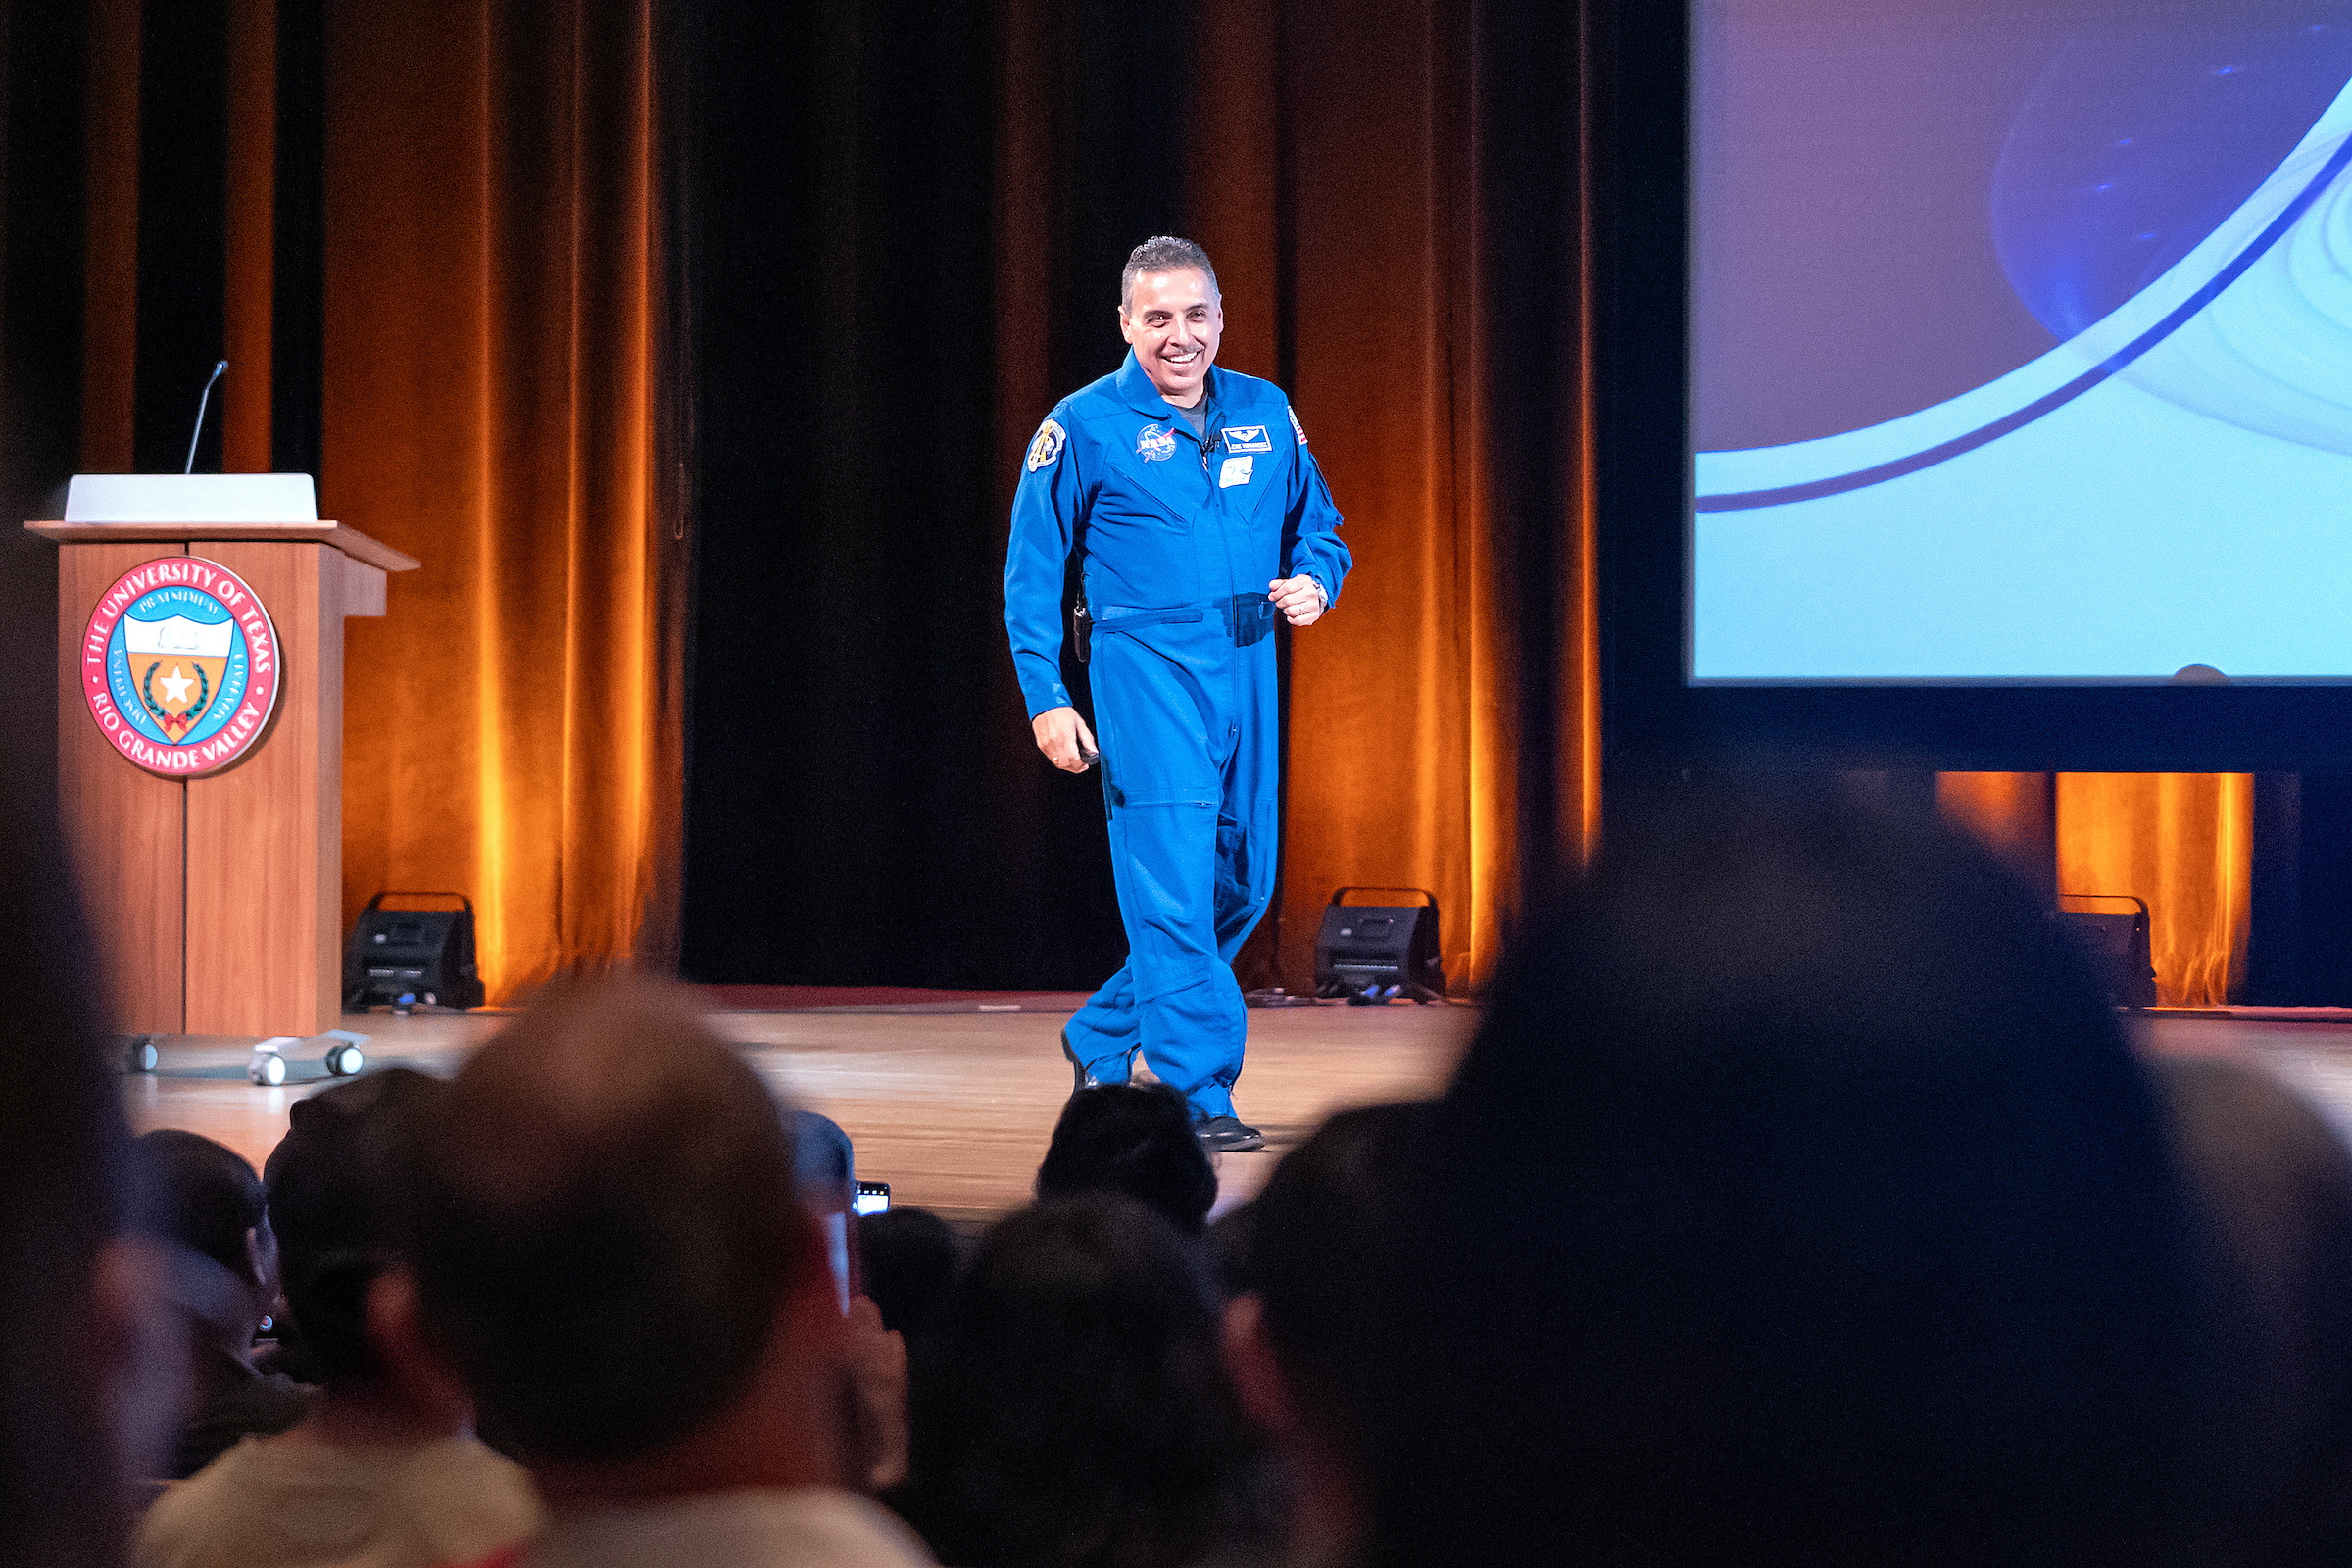 Twelfth time is a charm: Former NASA astronaut José Hernández at UTRGV